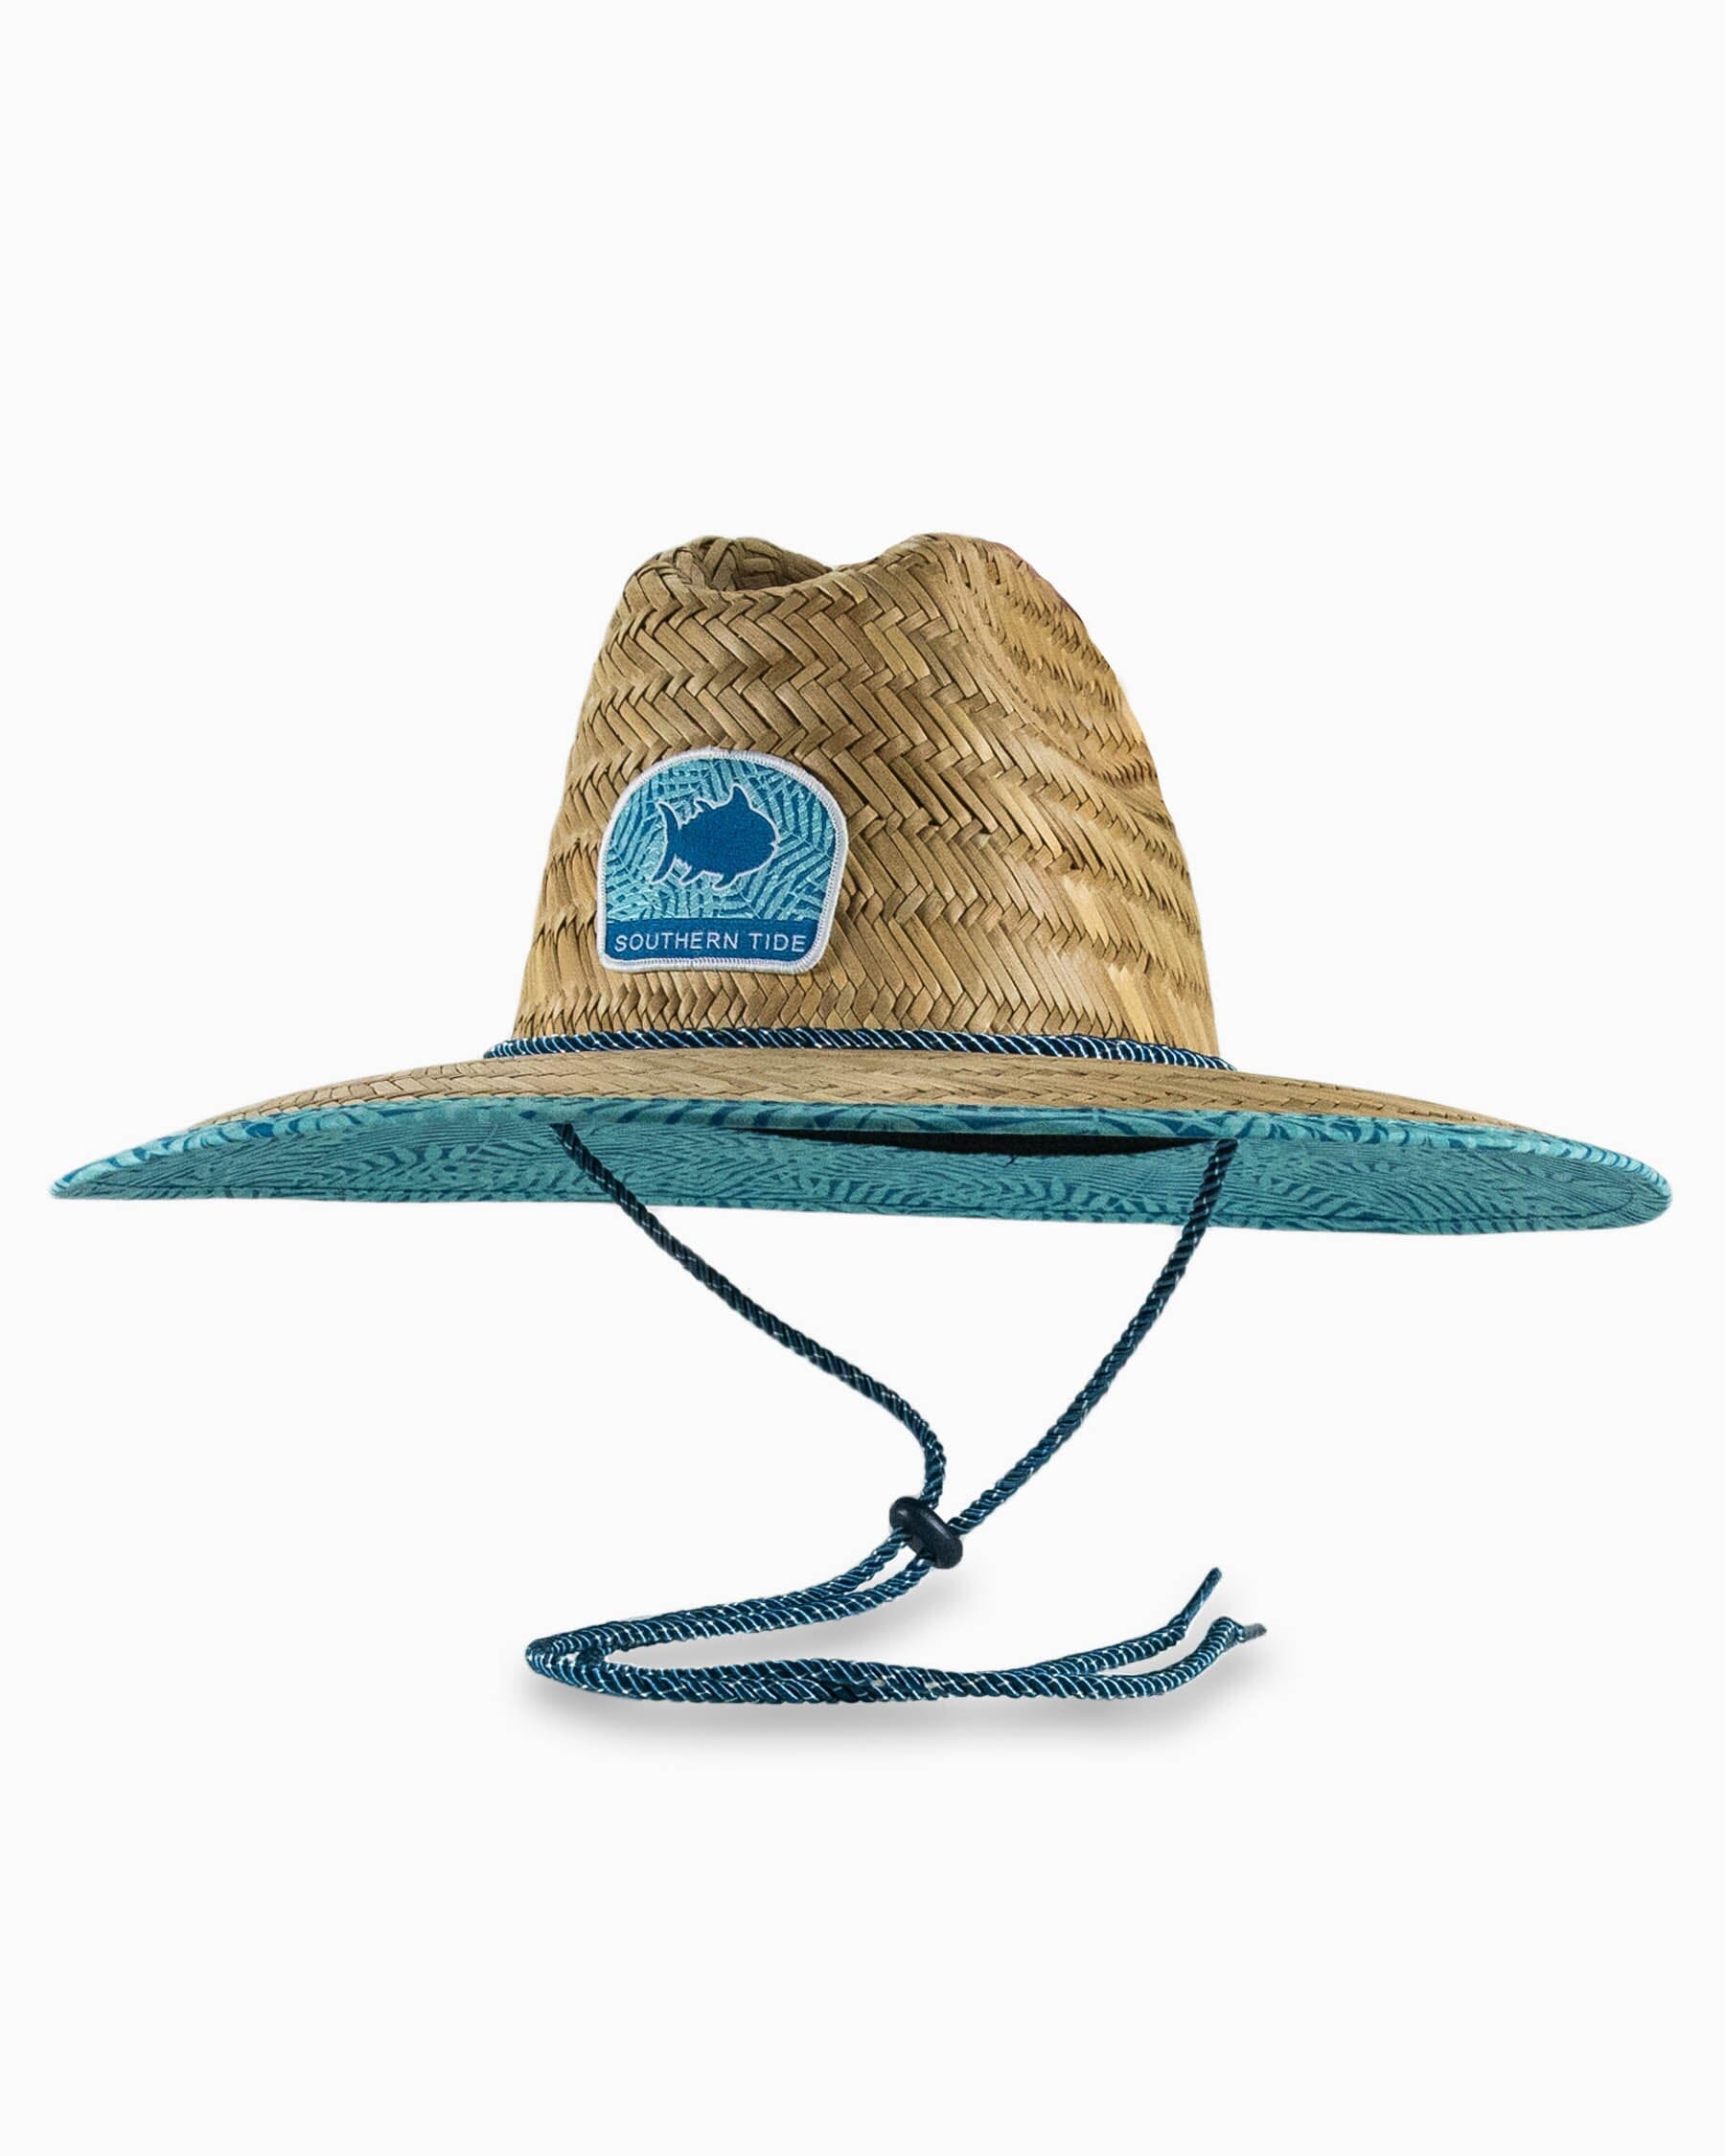 Southern Tide Vibin Palm Straw Hat: Atlantic Blue